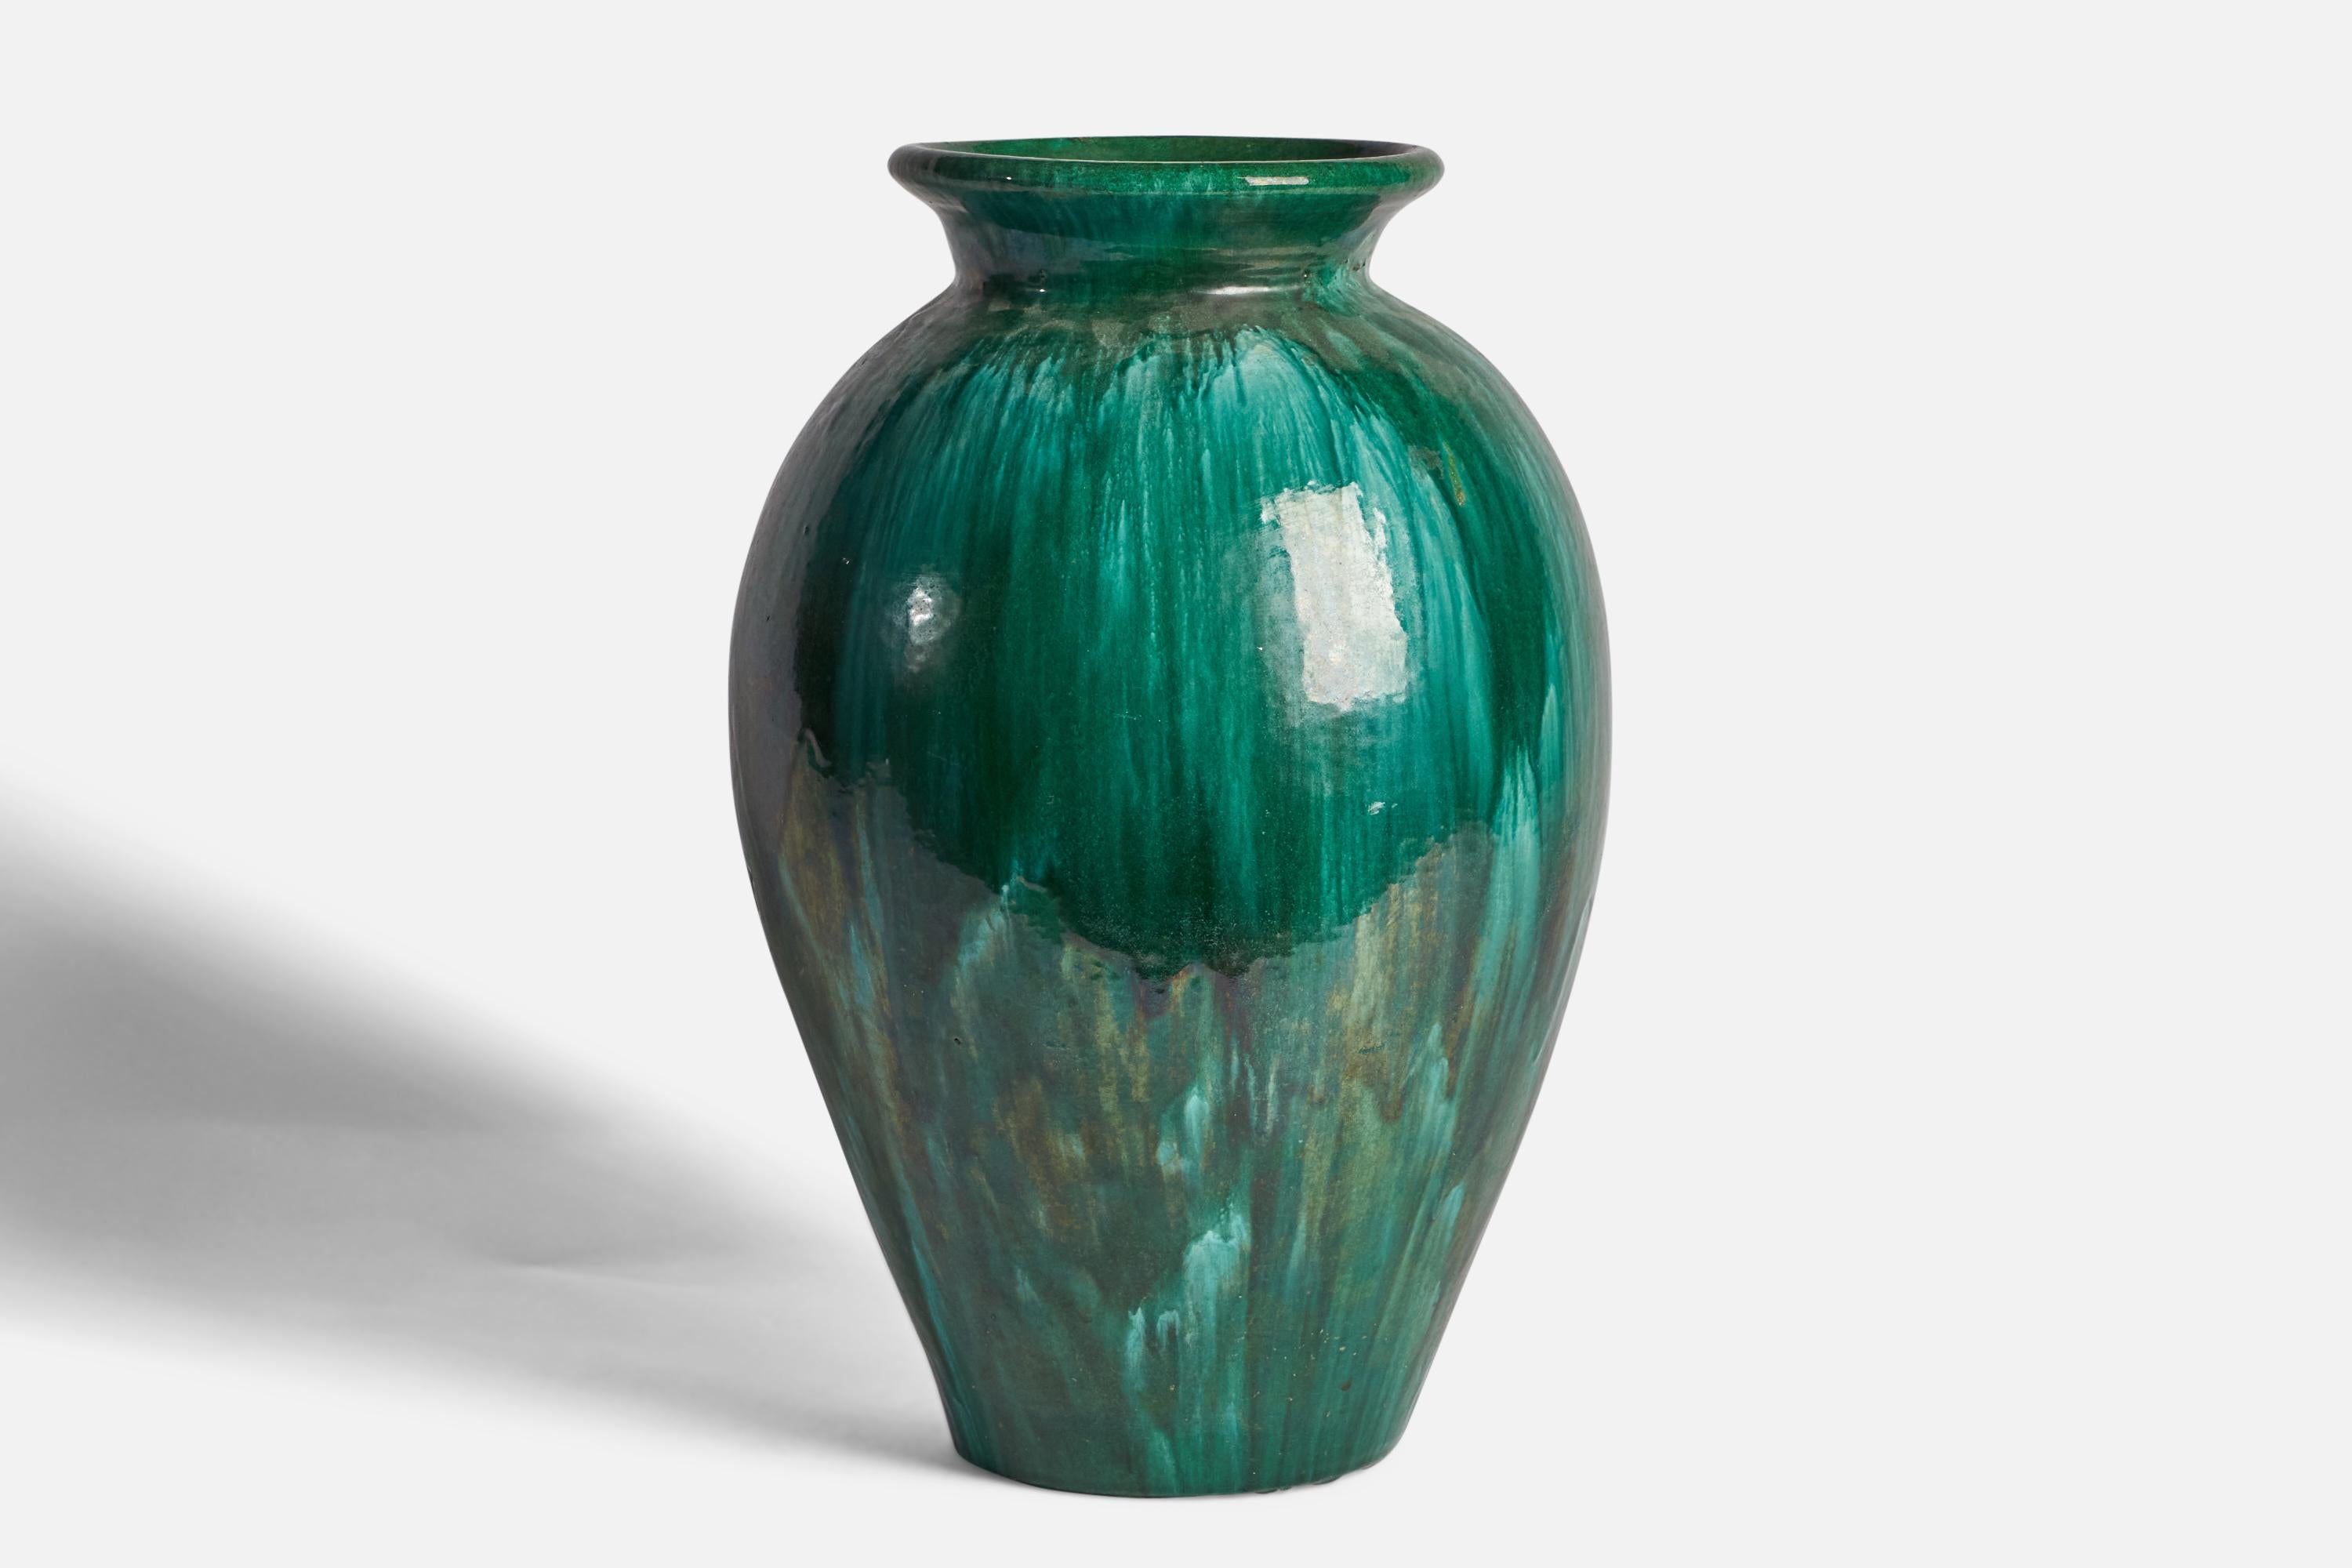 A green-glazed earthenware floor vase designed and produced in Denmark, 1930s.